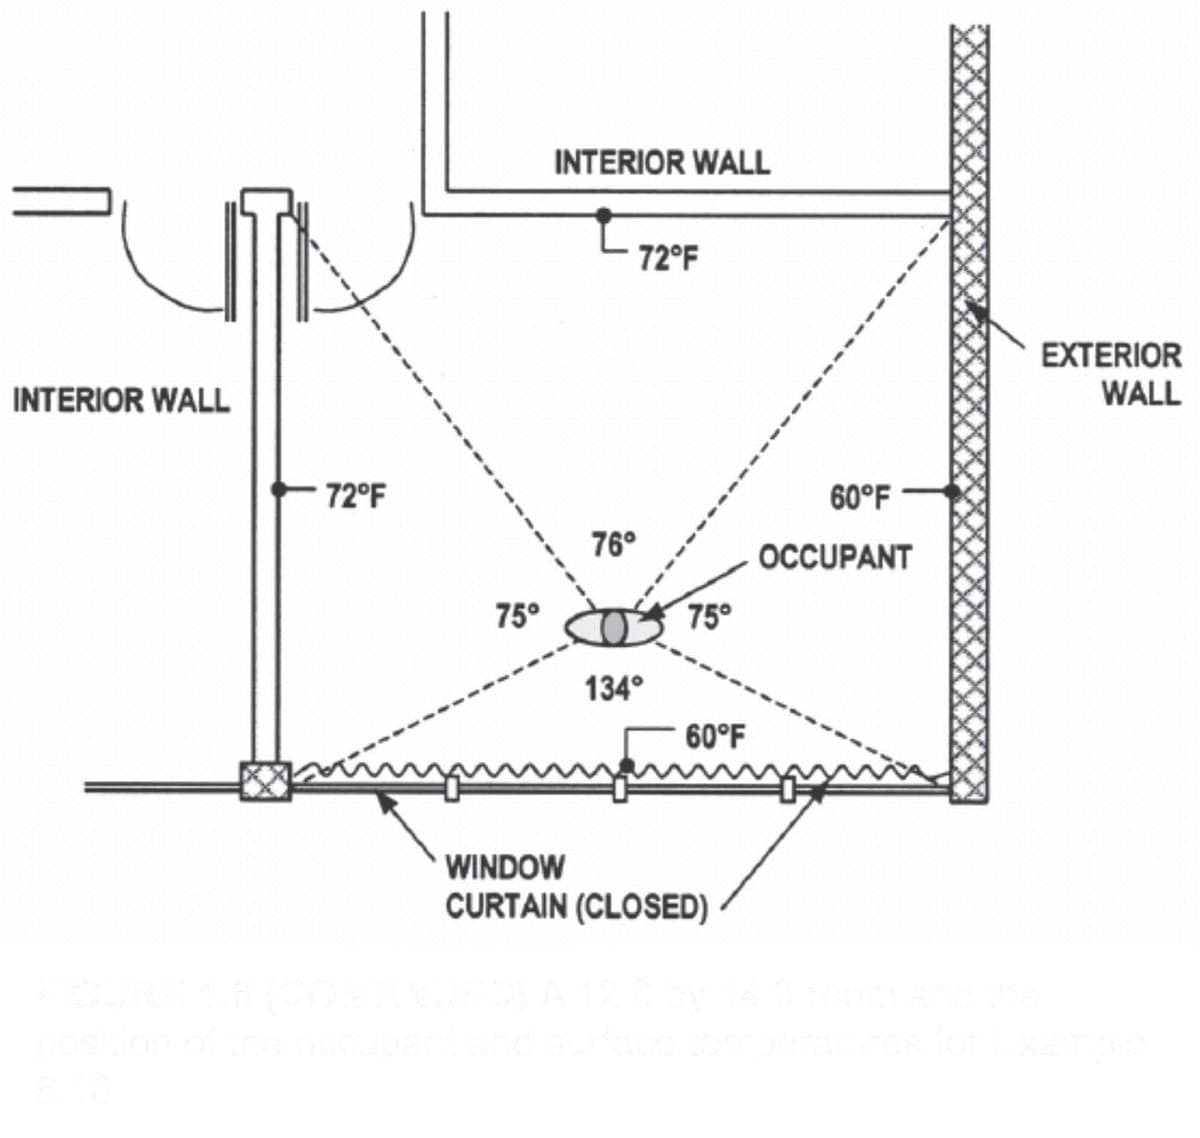 INTERIOR WALL
72°F
75°
INTERIOR WALL
76°
72°F
134°
75°
60°F
WINDOW
CURTAIN (CLOSED)
60°F
OCCUPANT
EXTERIOR
WALL